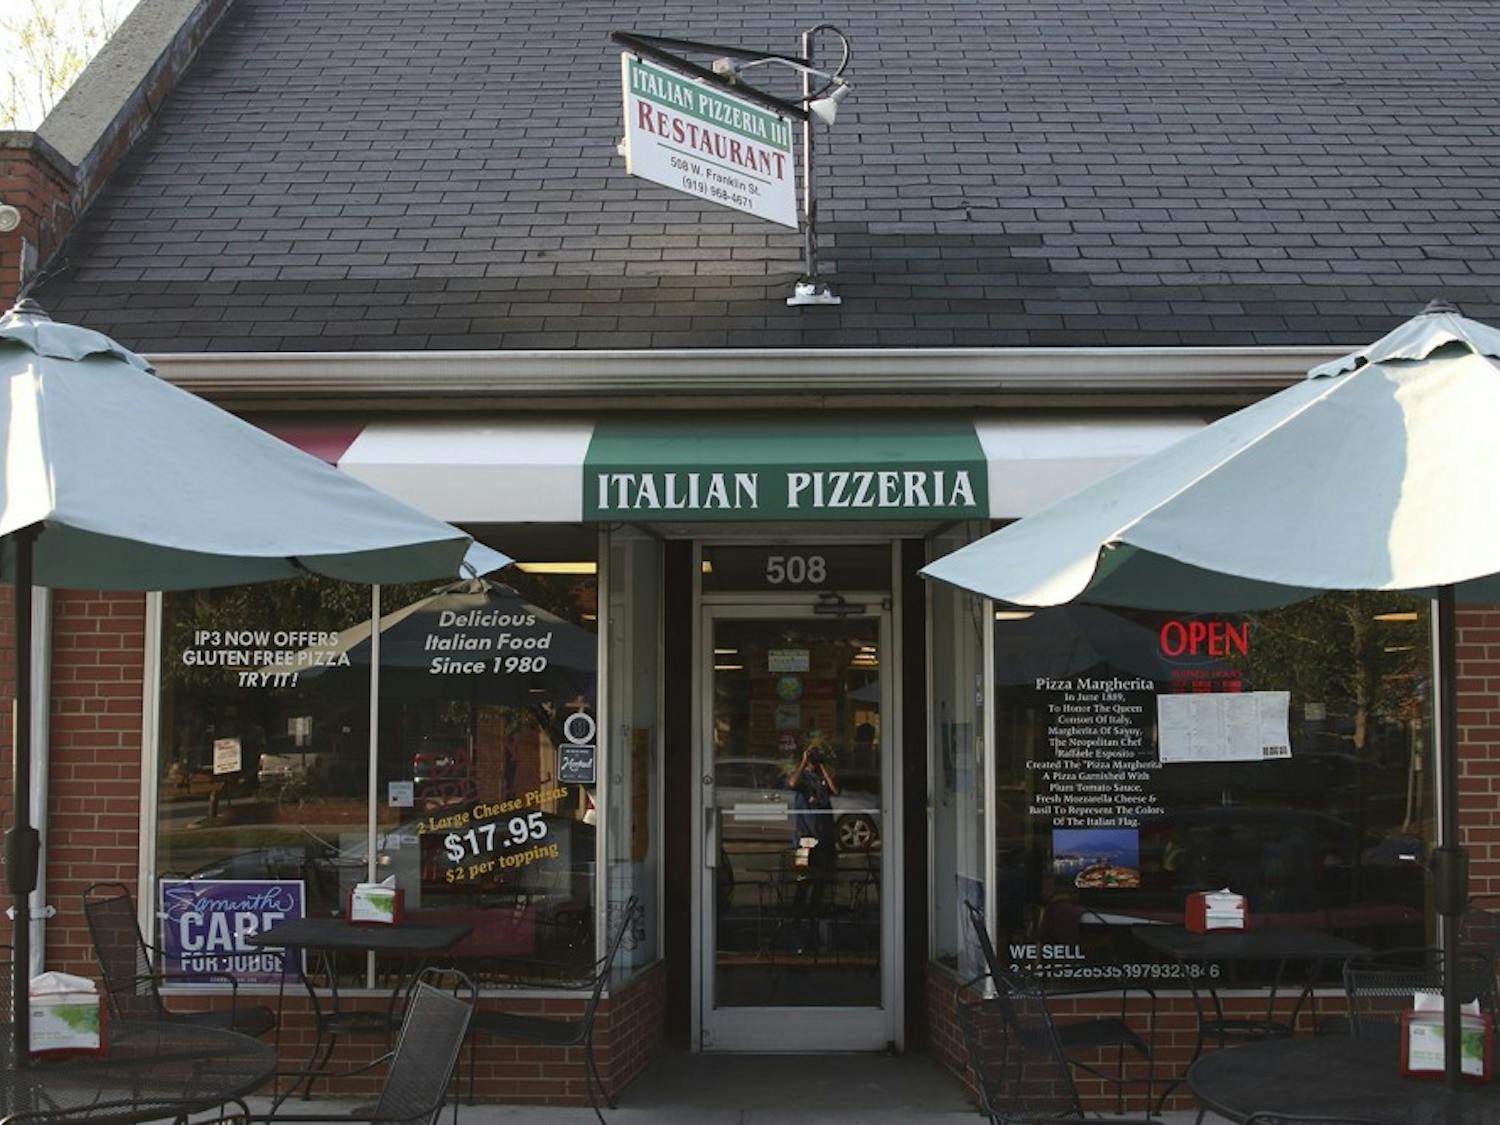 Italian Pizzeria III has existed since 1980.